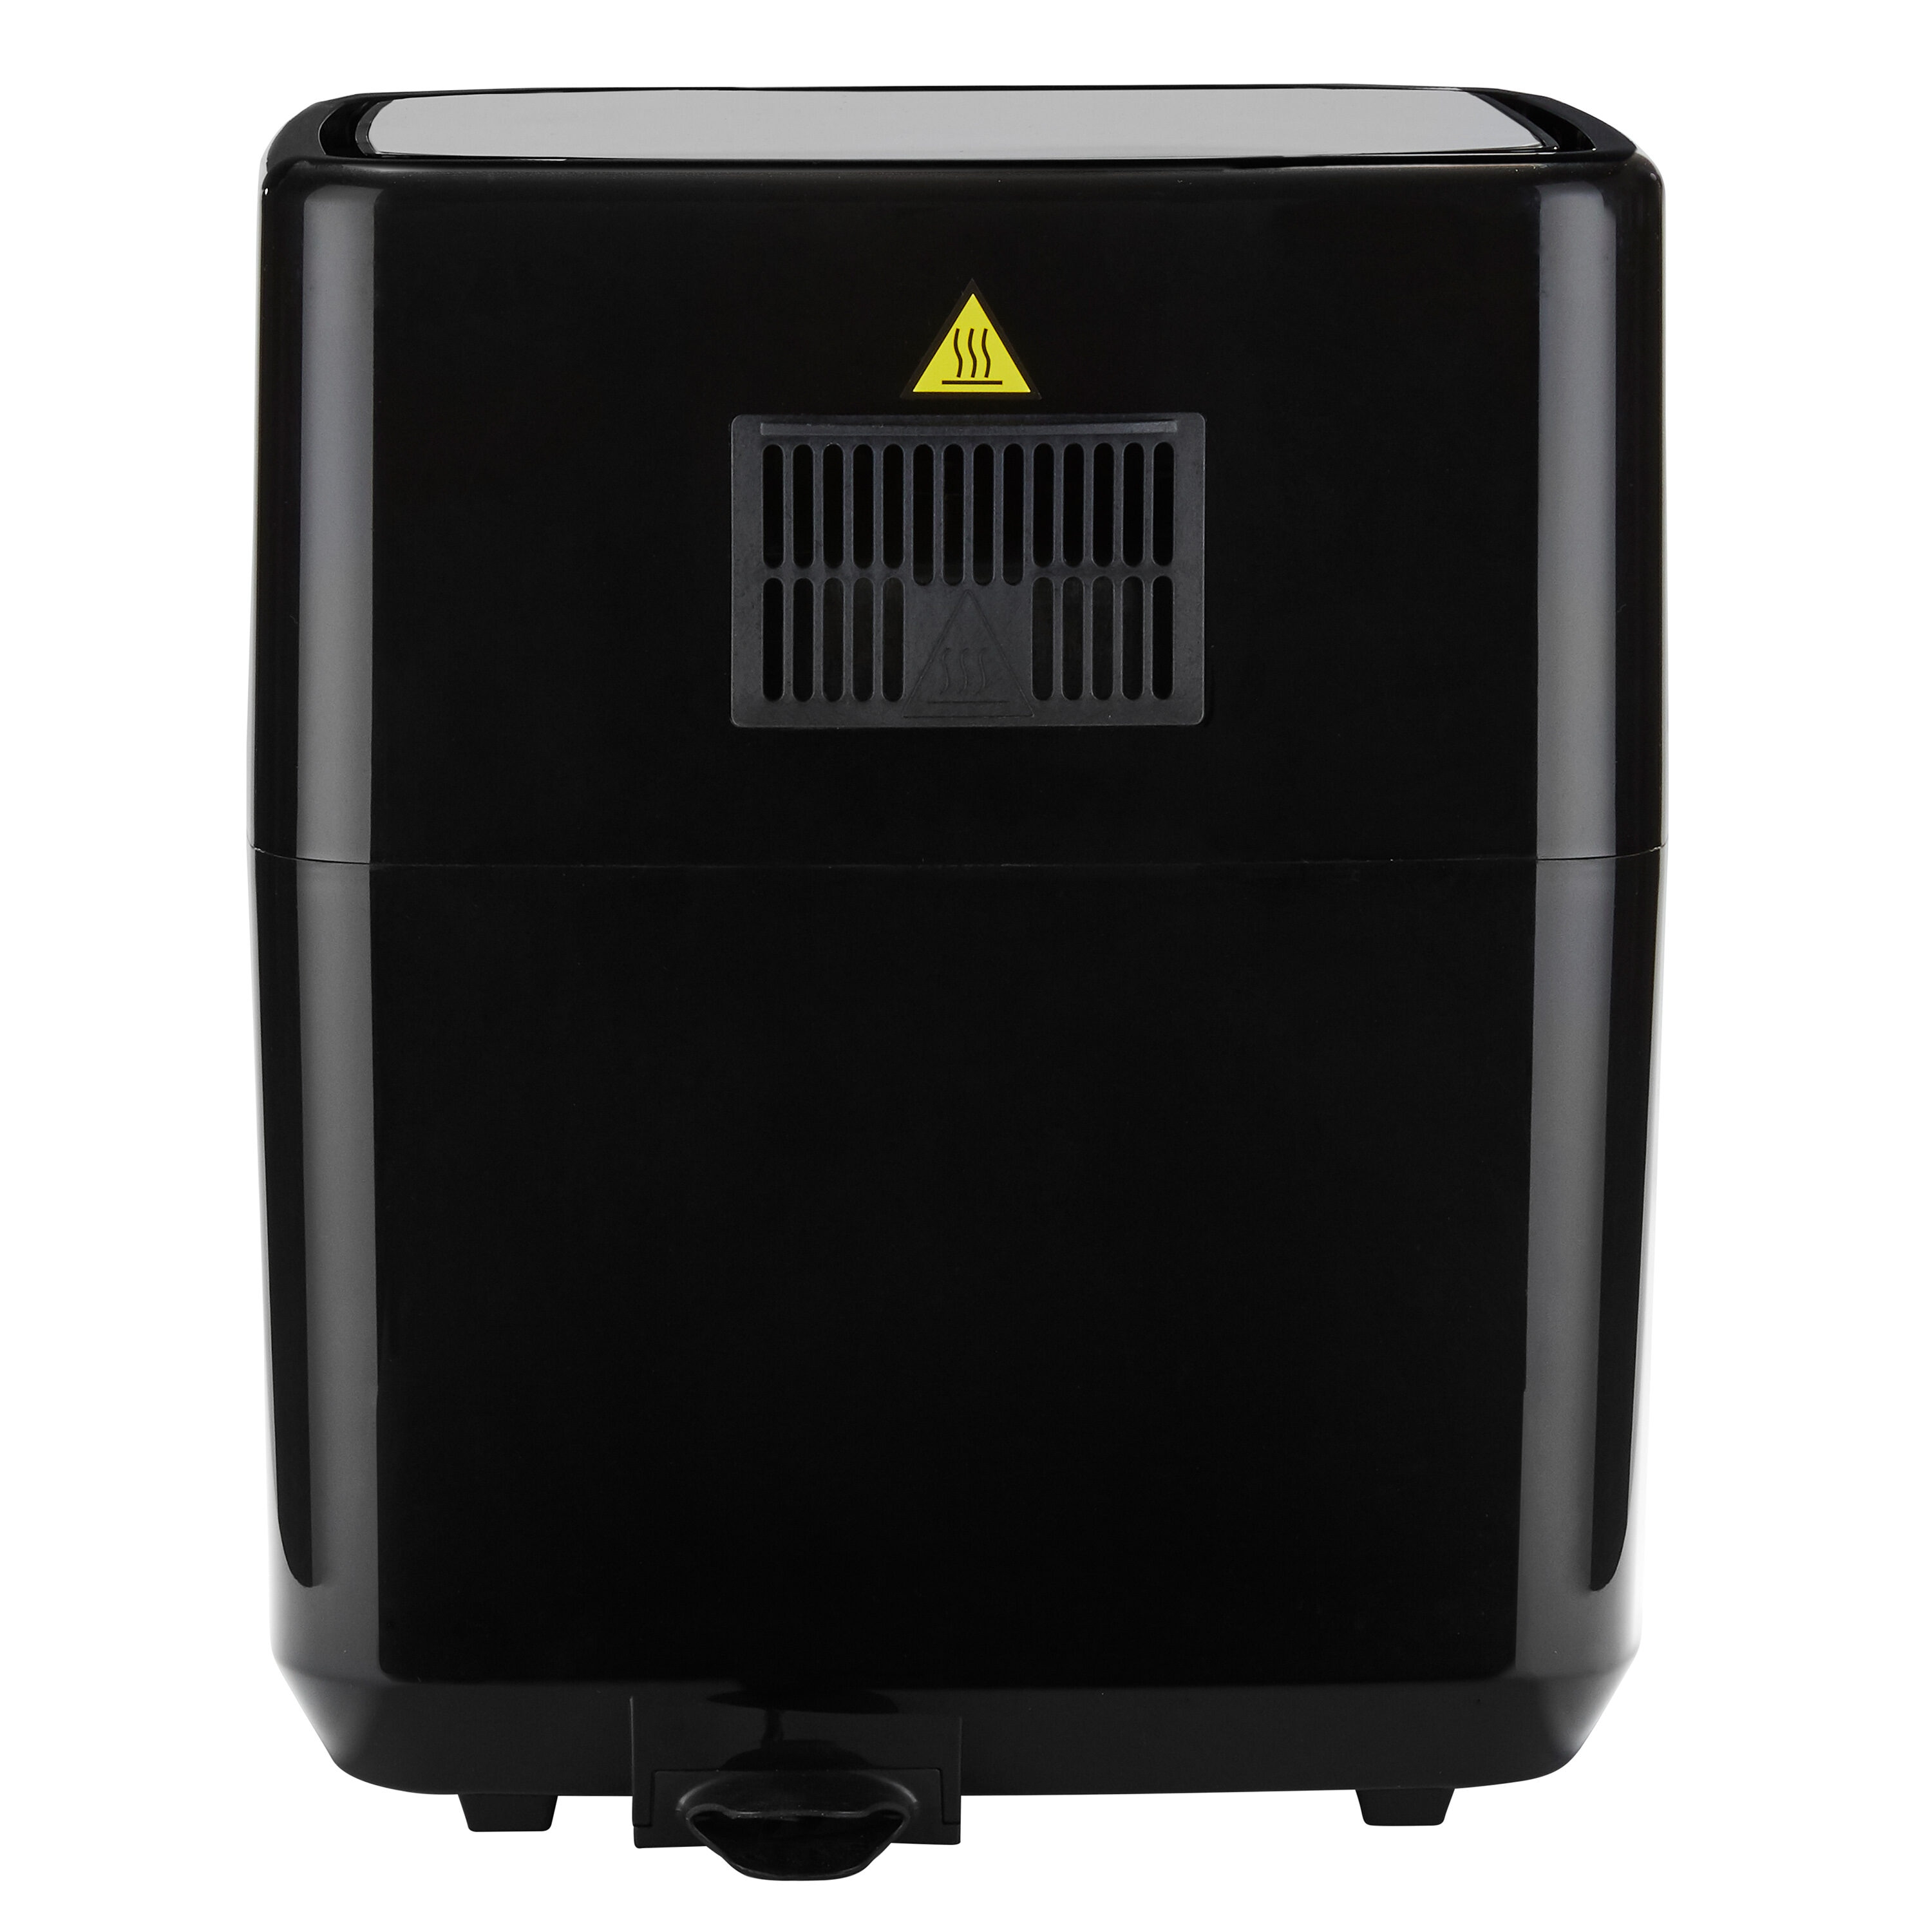 West Bend - 12.6 qt. XL Digital Air Fryer Oven